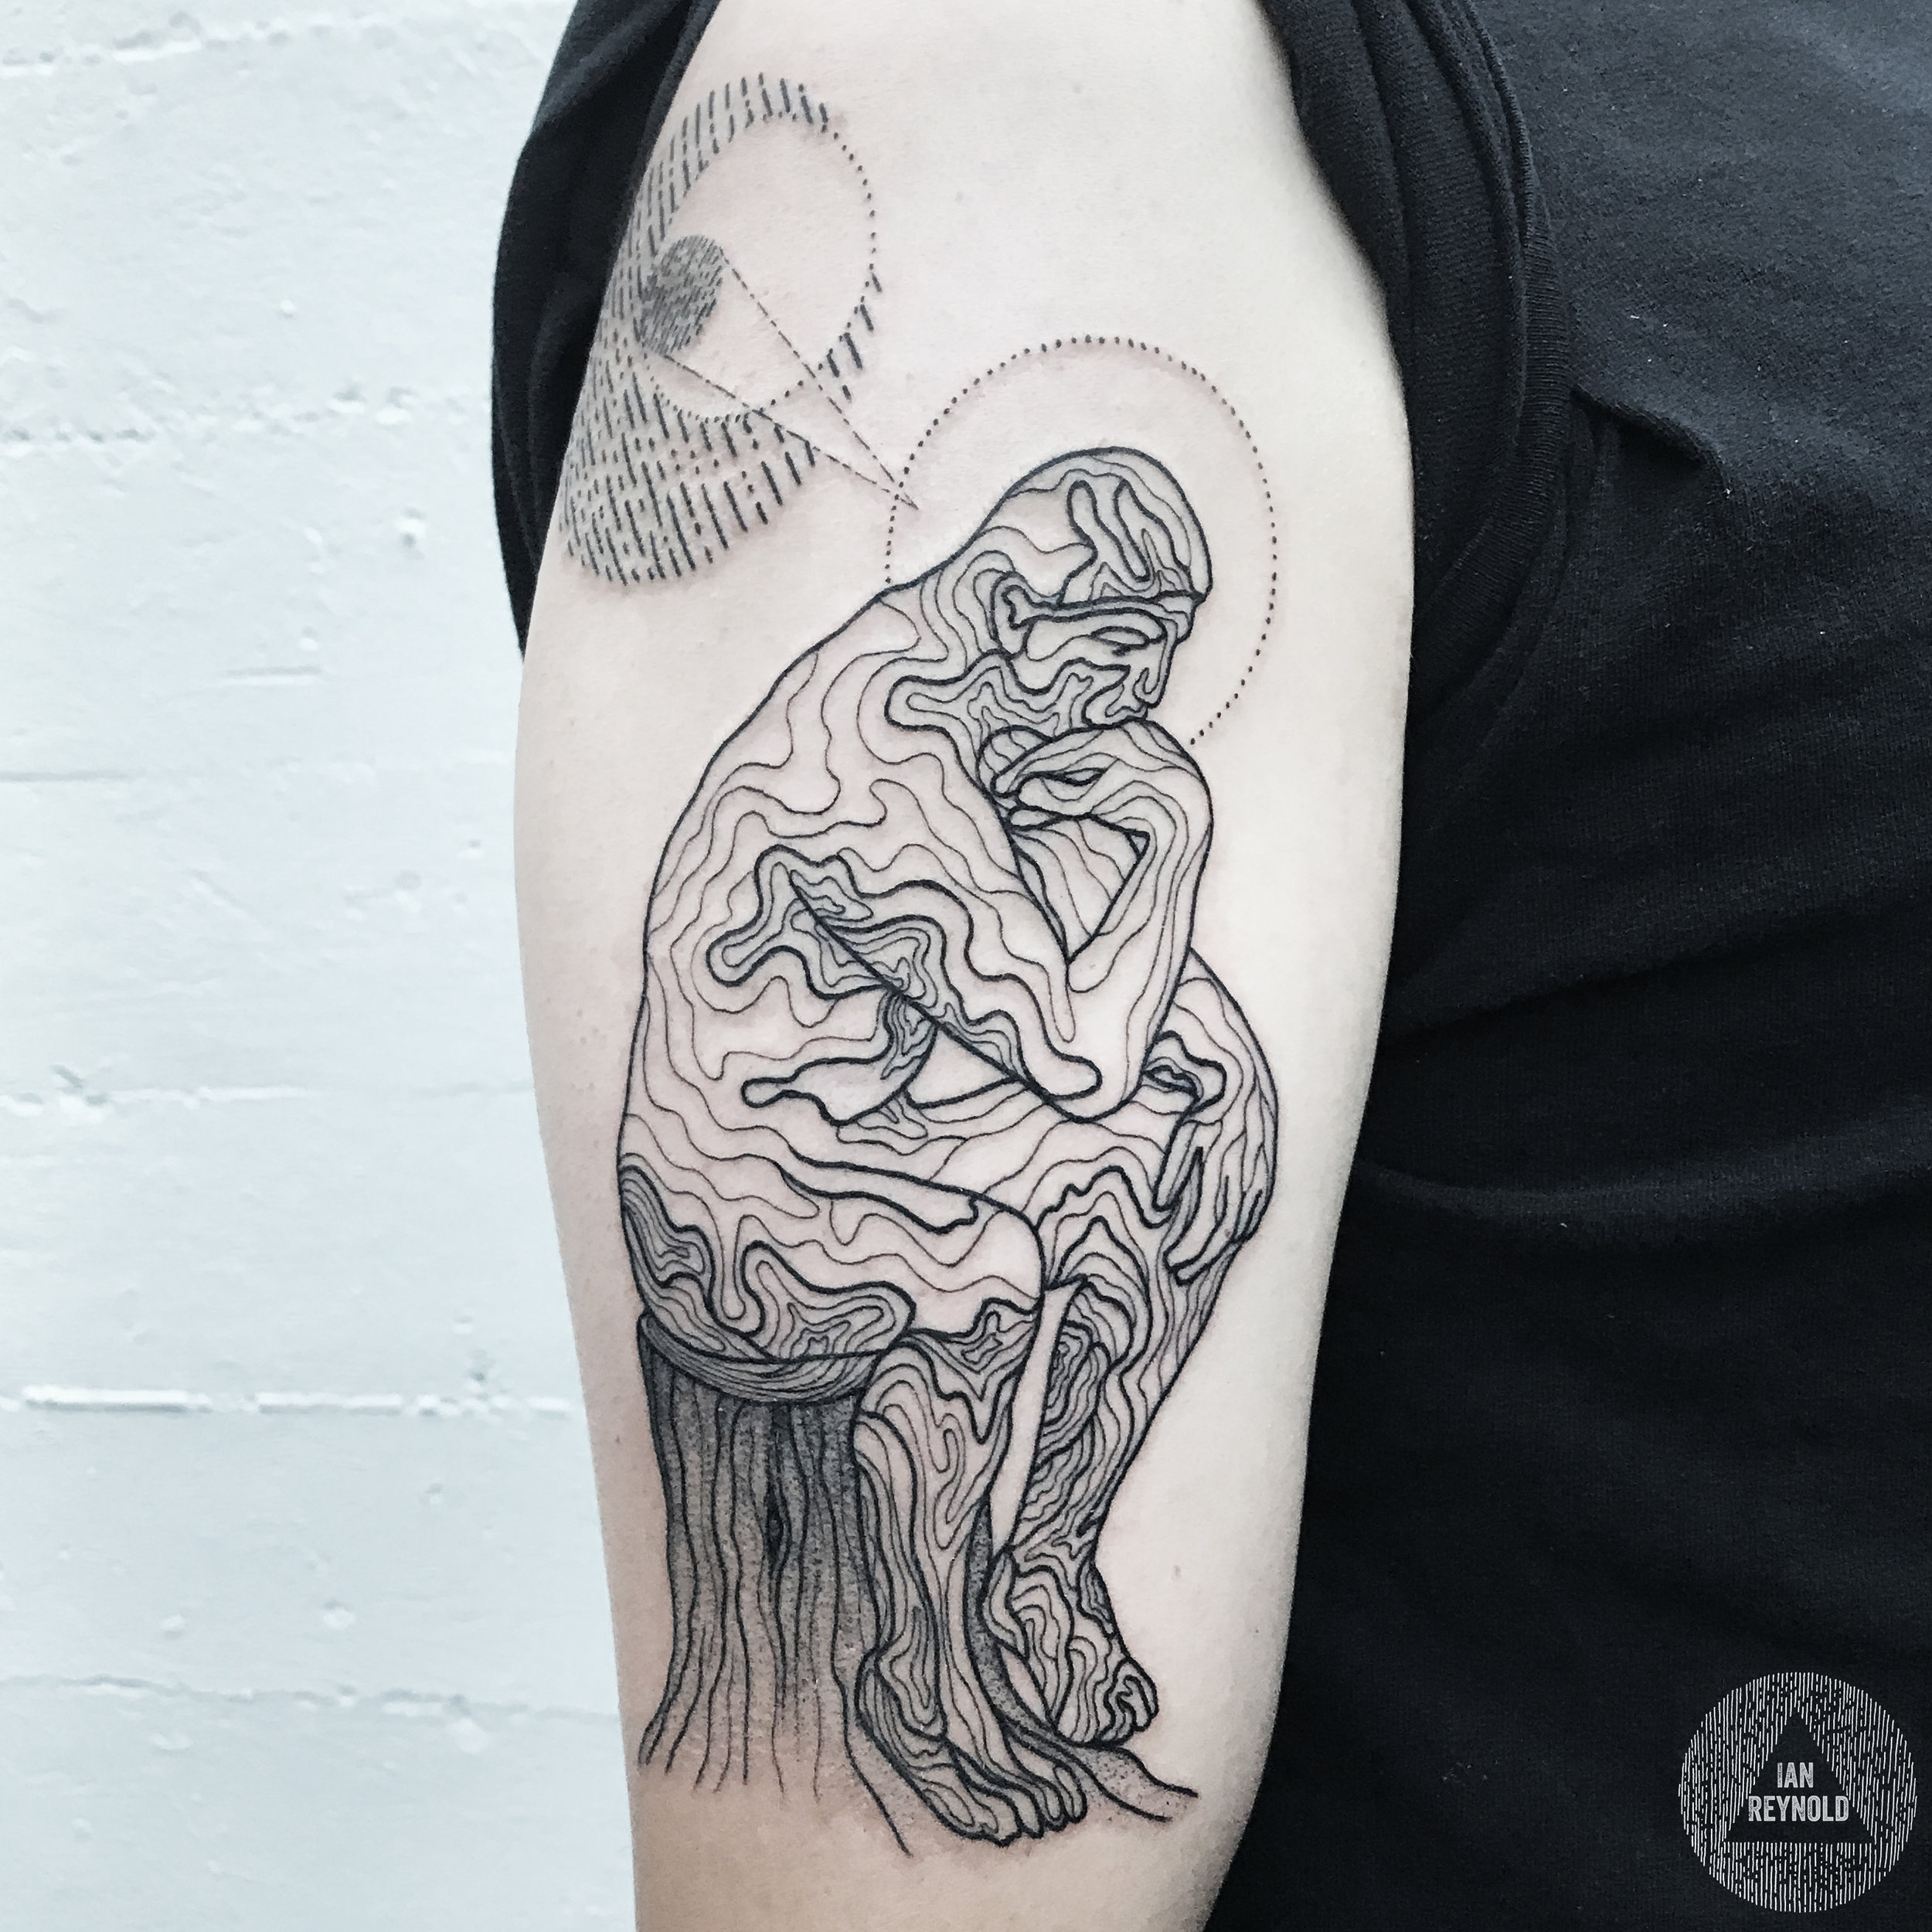 Tattoos — Ian Reynold